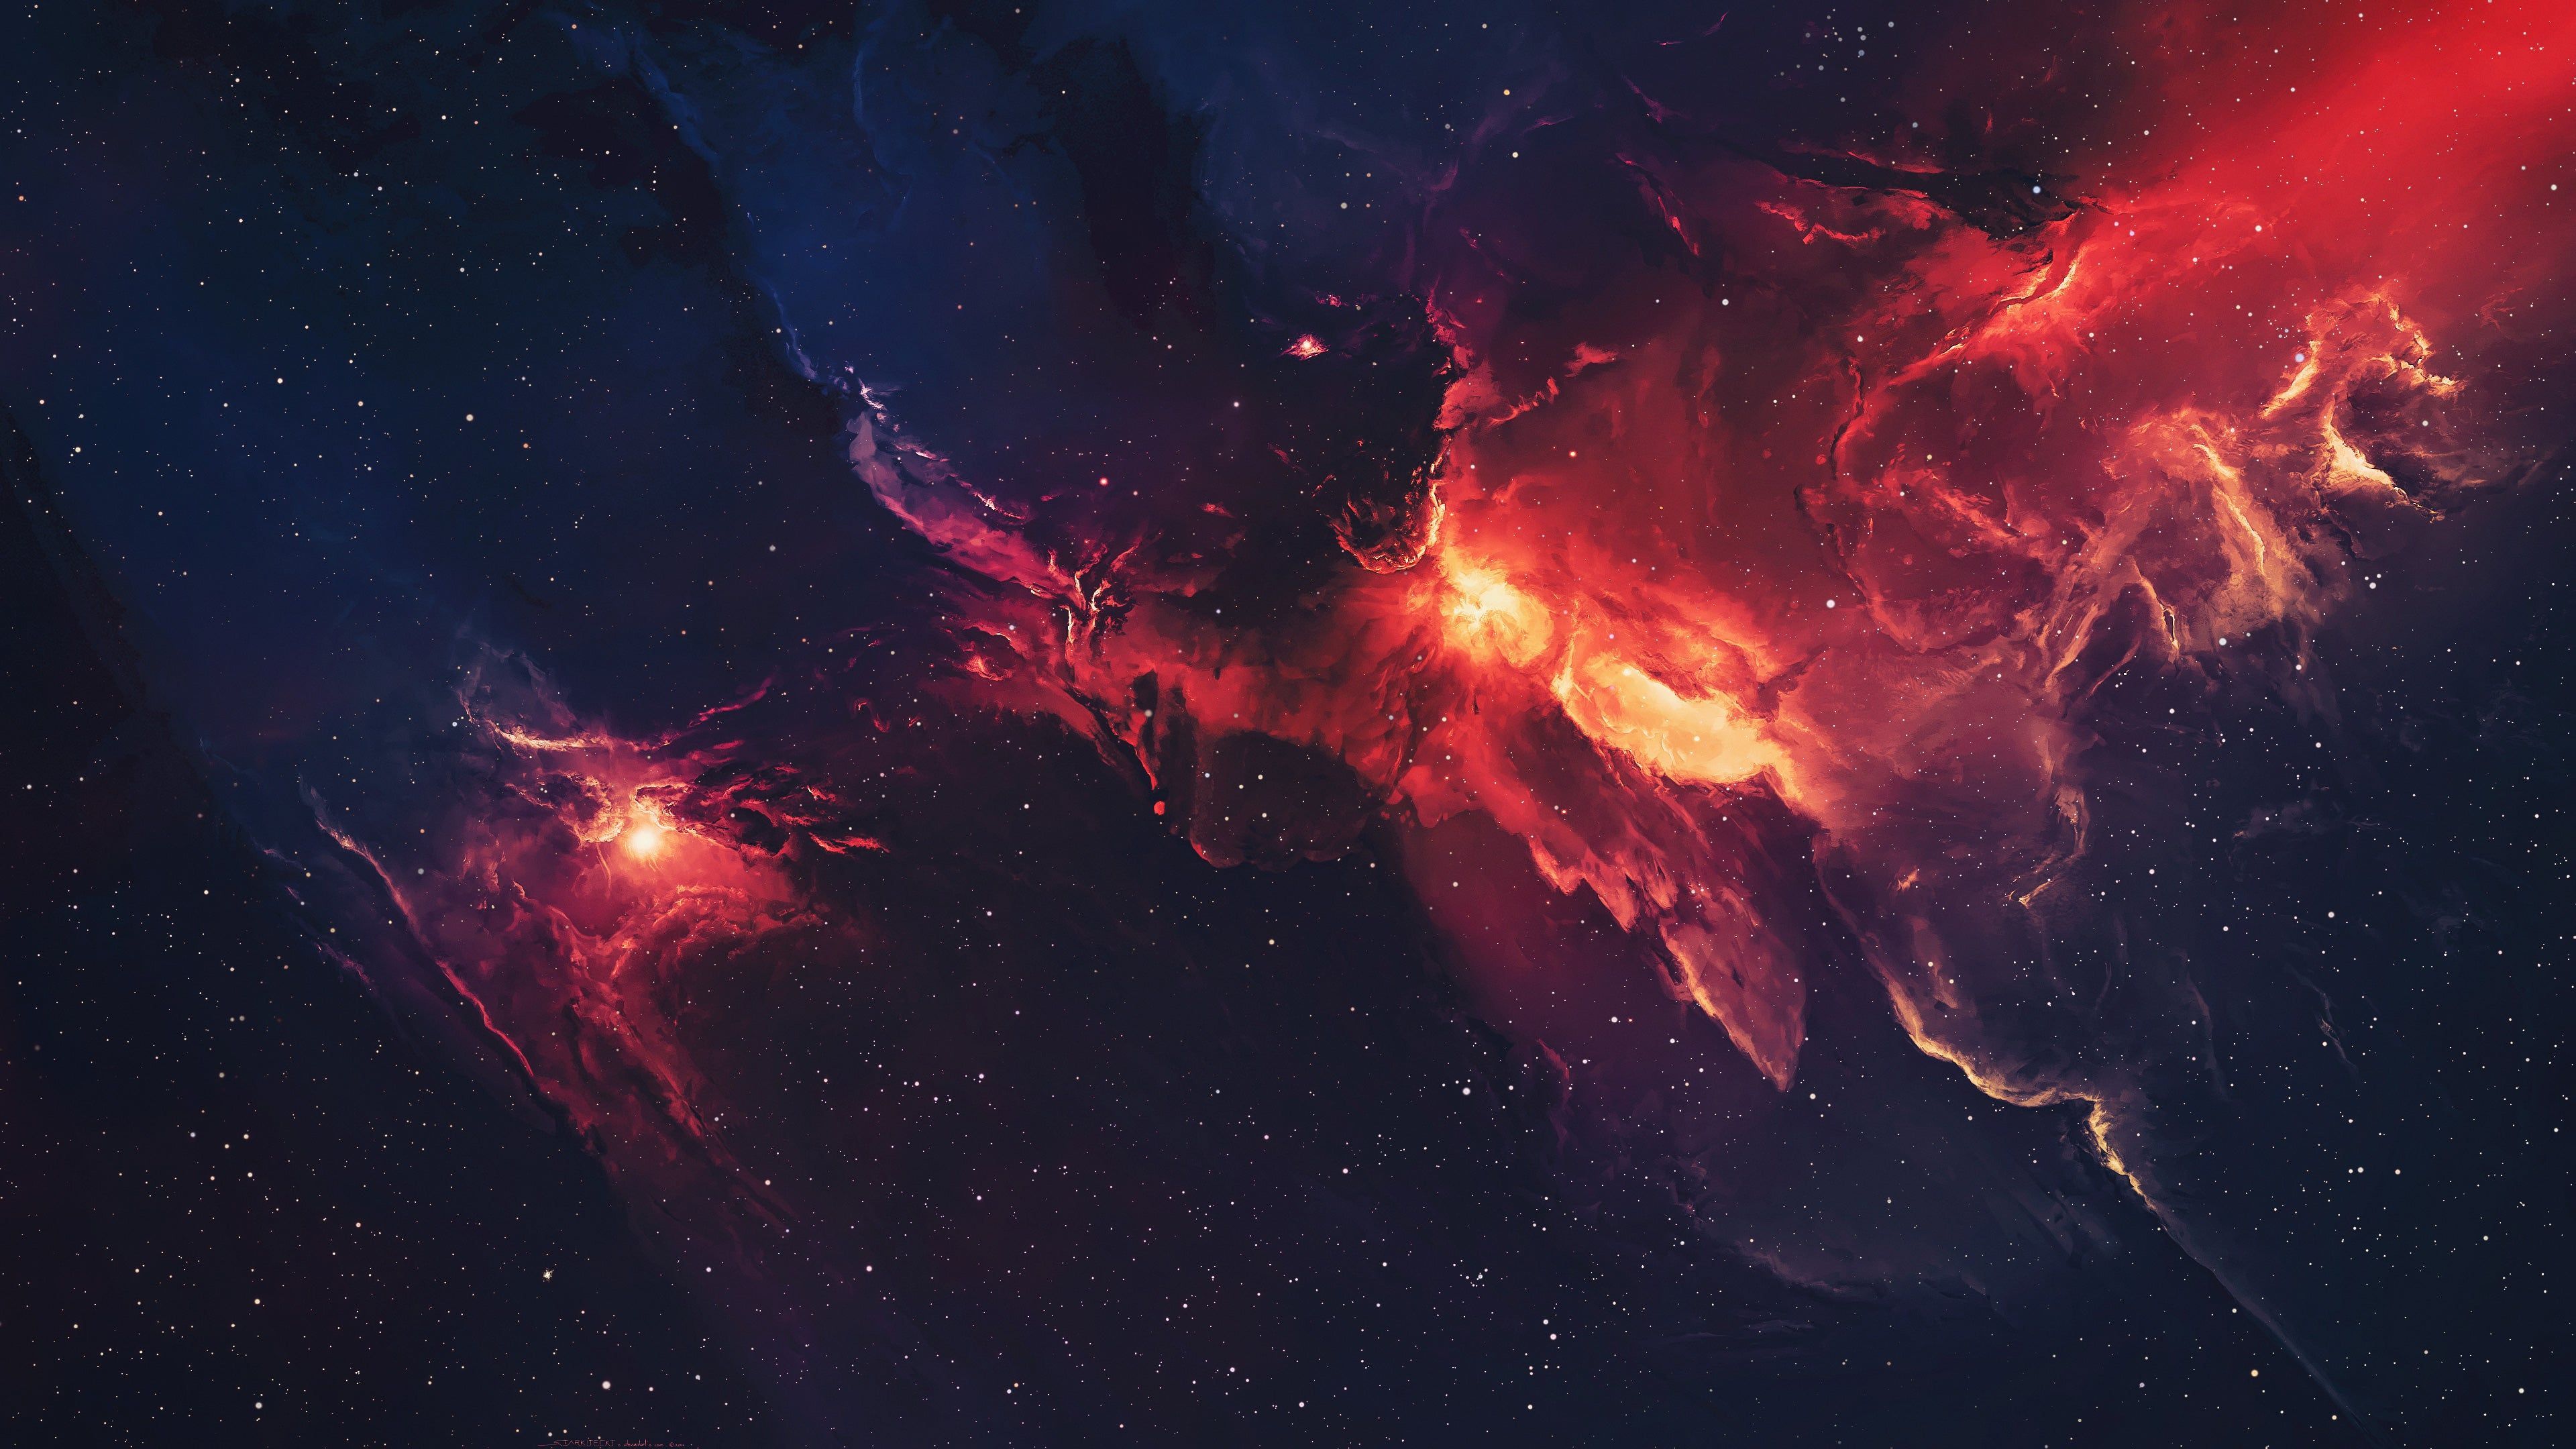 Red and Blue Nebula 4K wallpaper. Nebula wallpaper, Galaxy wallpaper, Star wallpaper